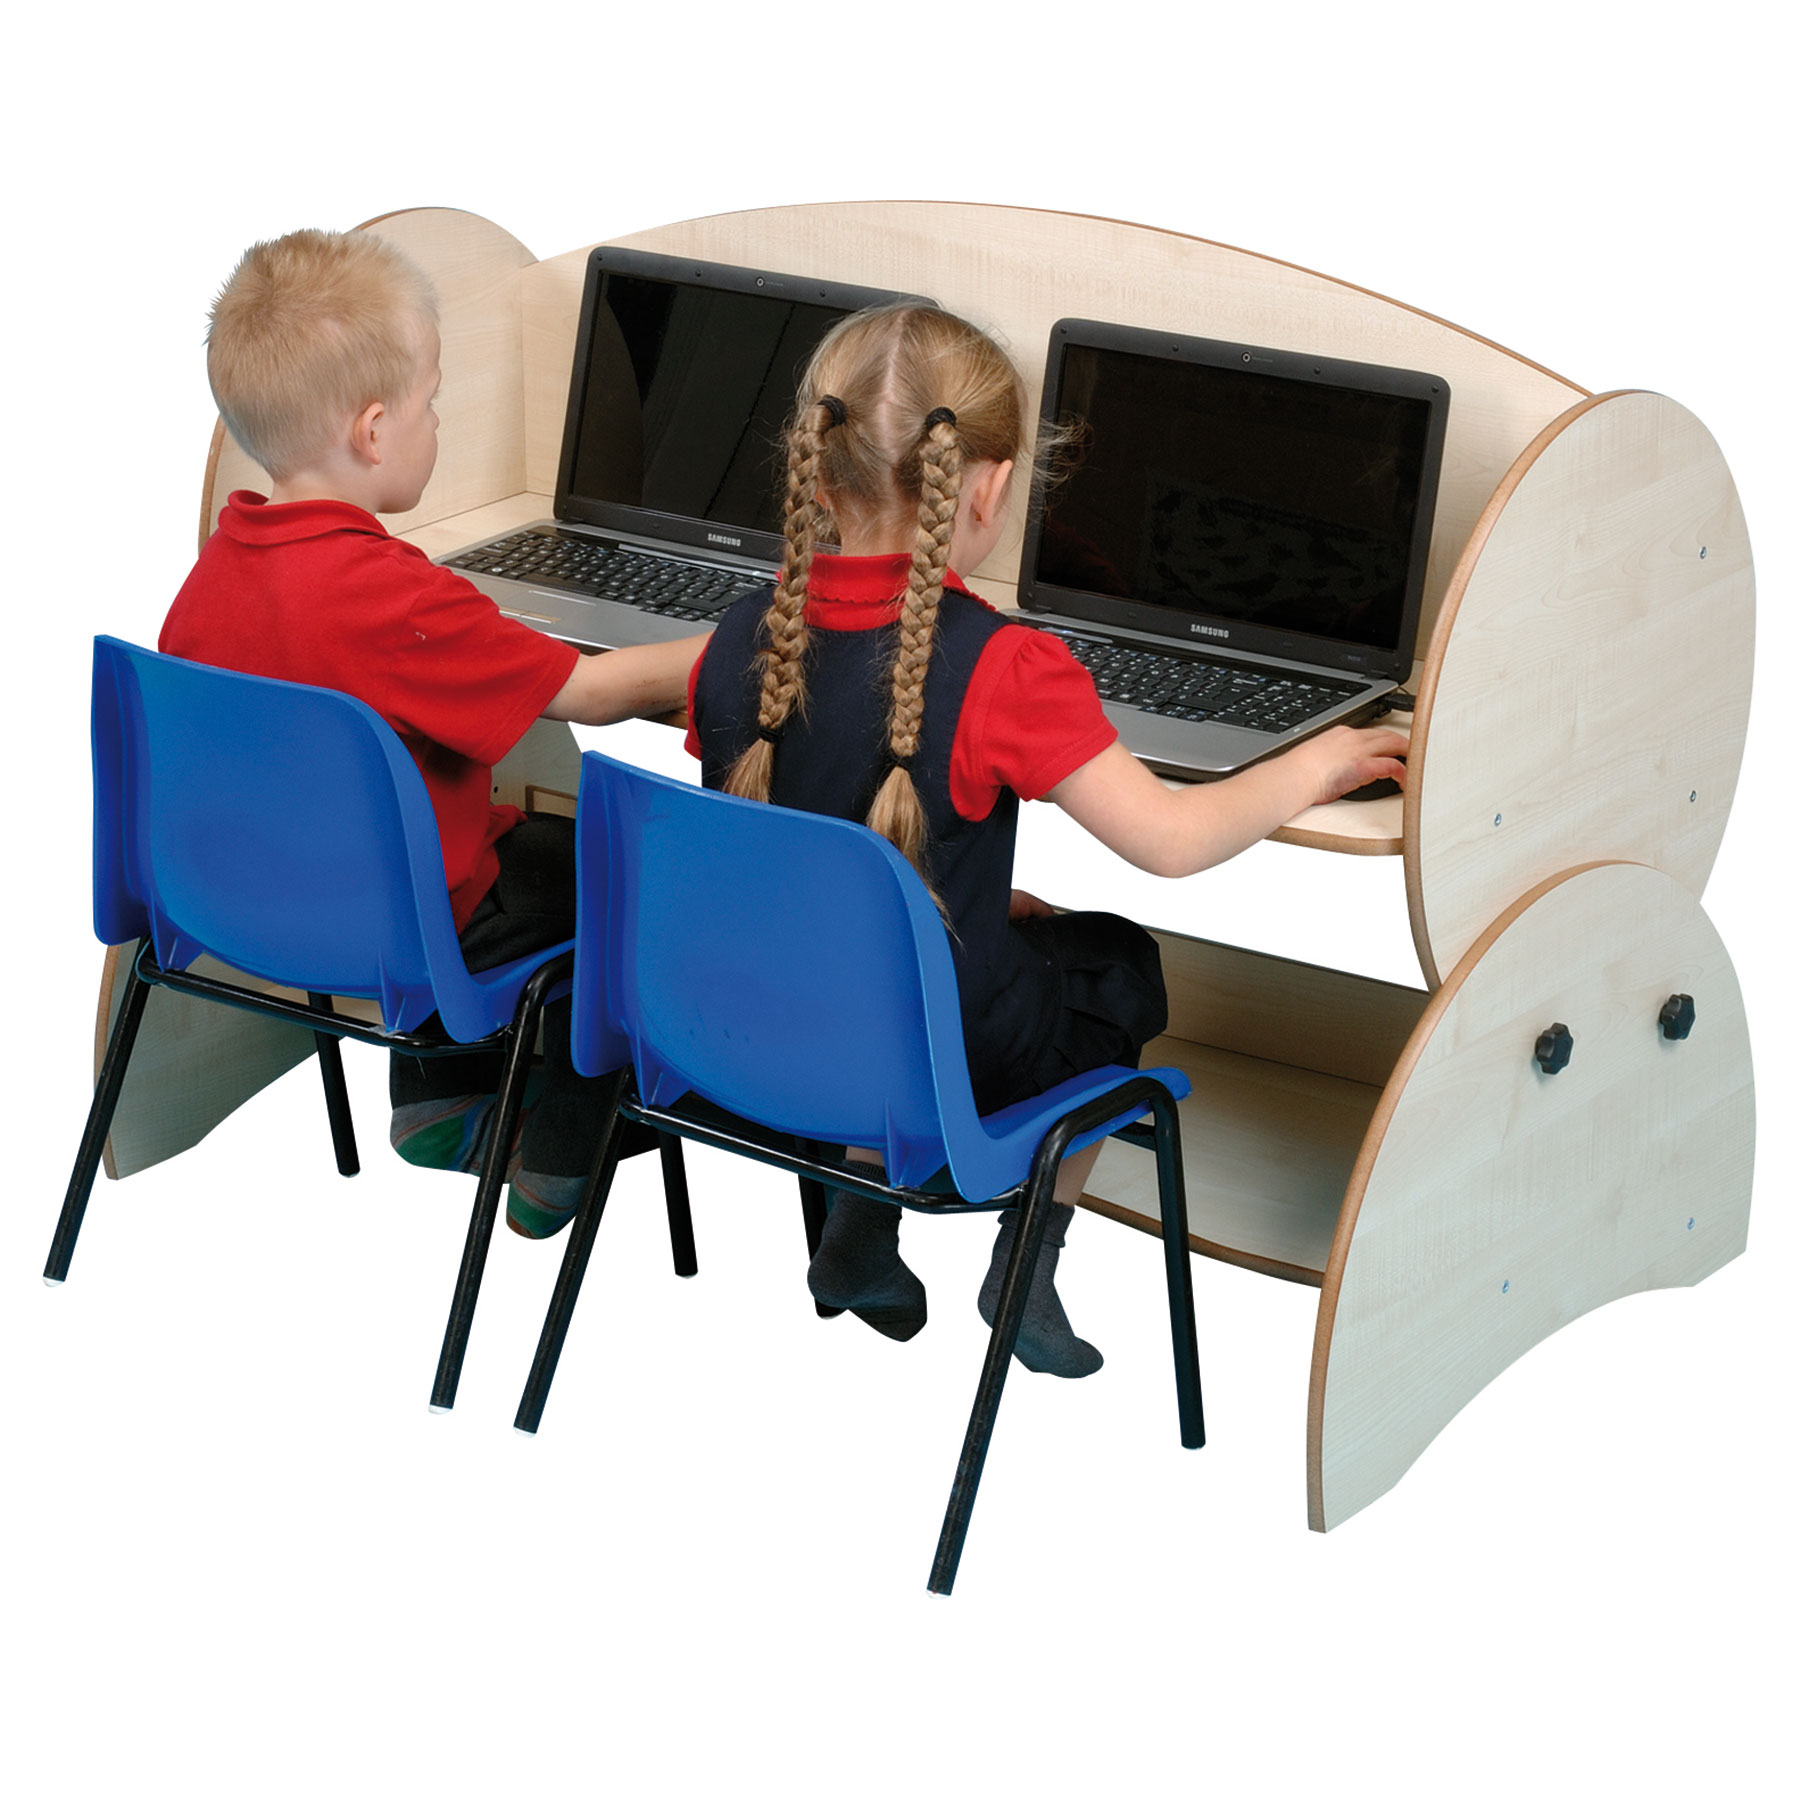 Children's Wide Low-Level Adjustable Computer Desk